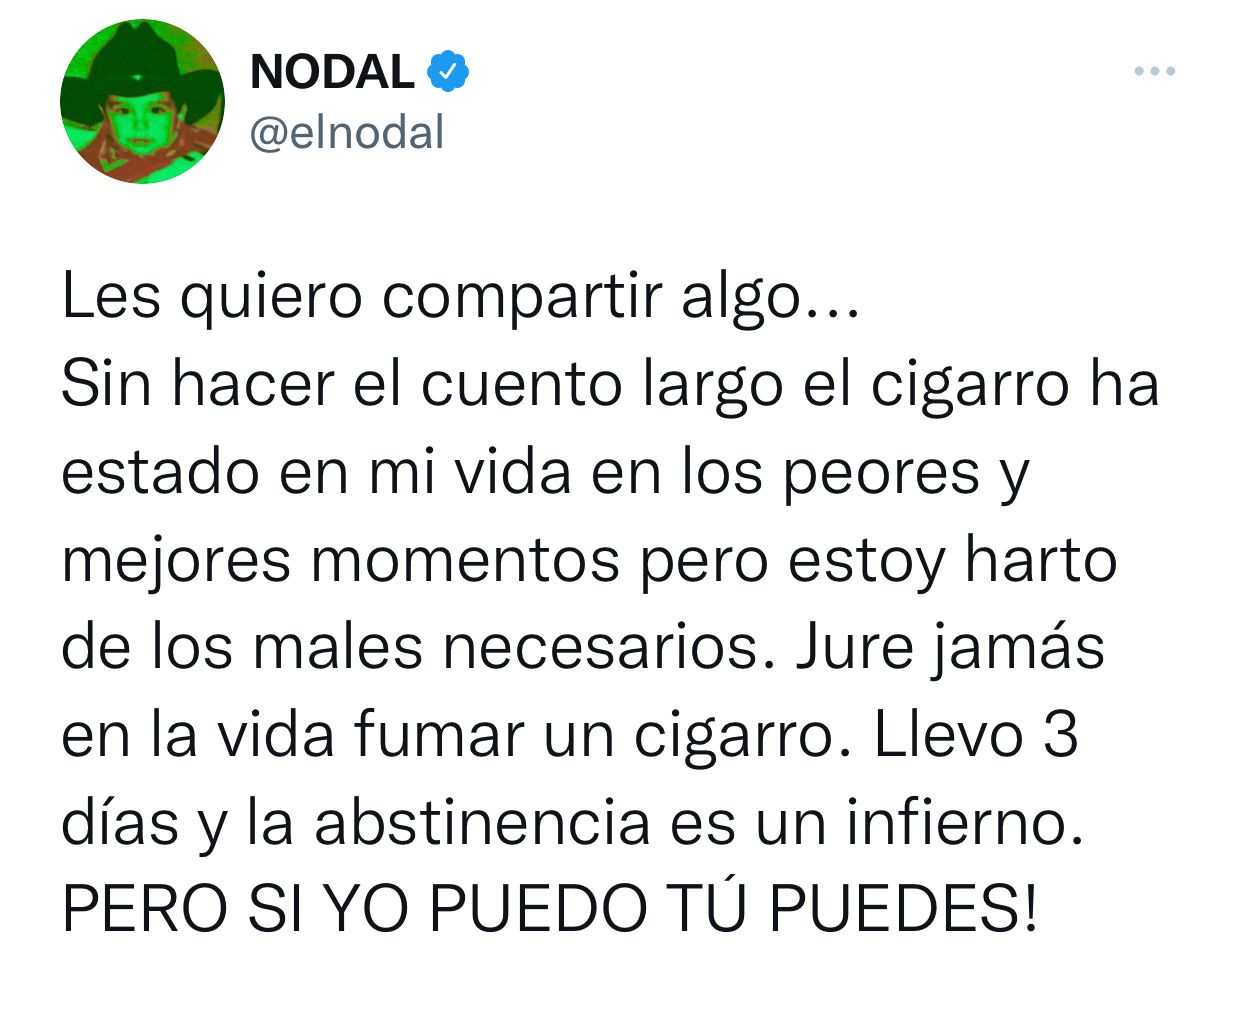 Christian Nodal bucó dejar el cigarro (Twitter: @elnodal)